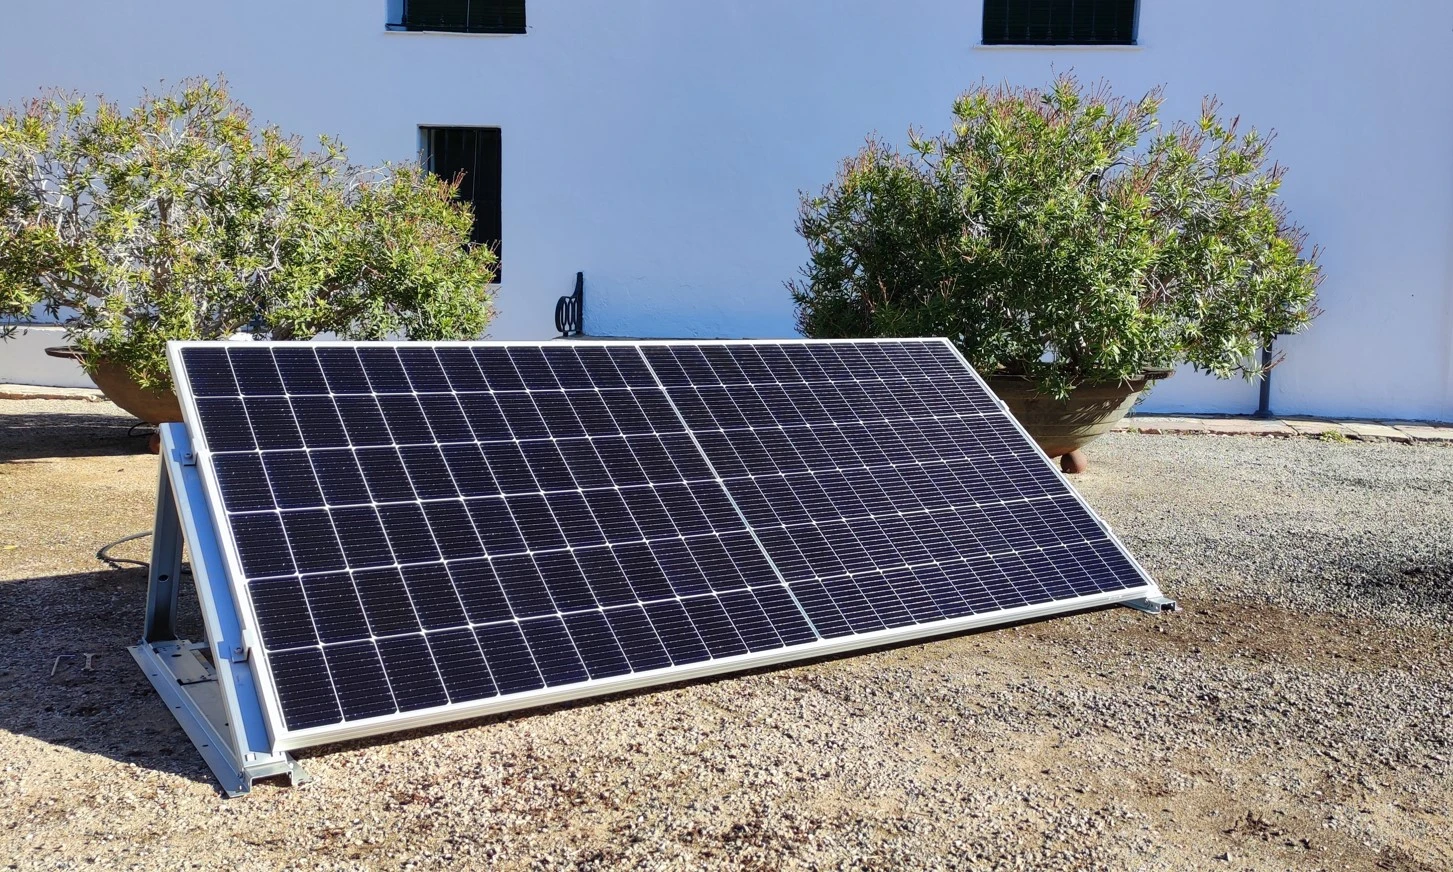 Kits Solar Completo para Huerta o pequeña casa l